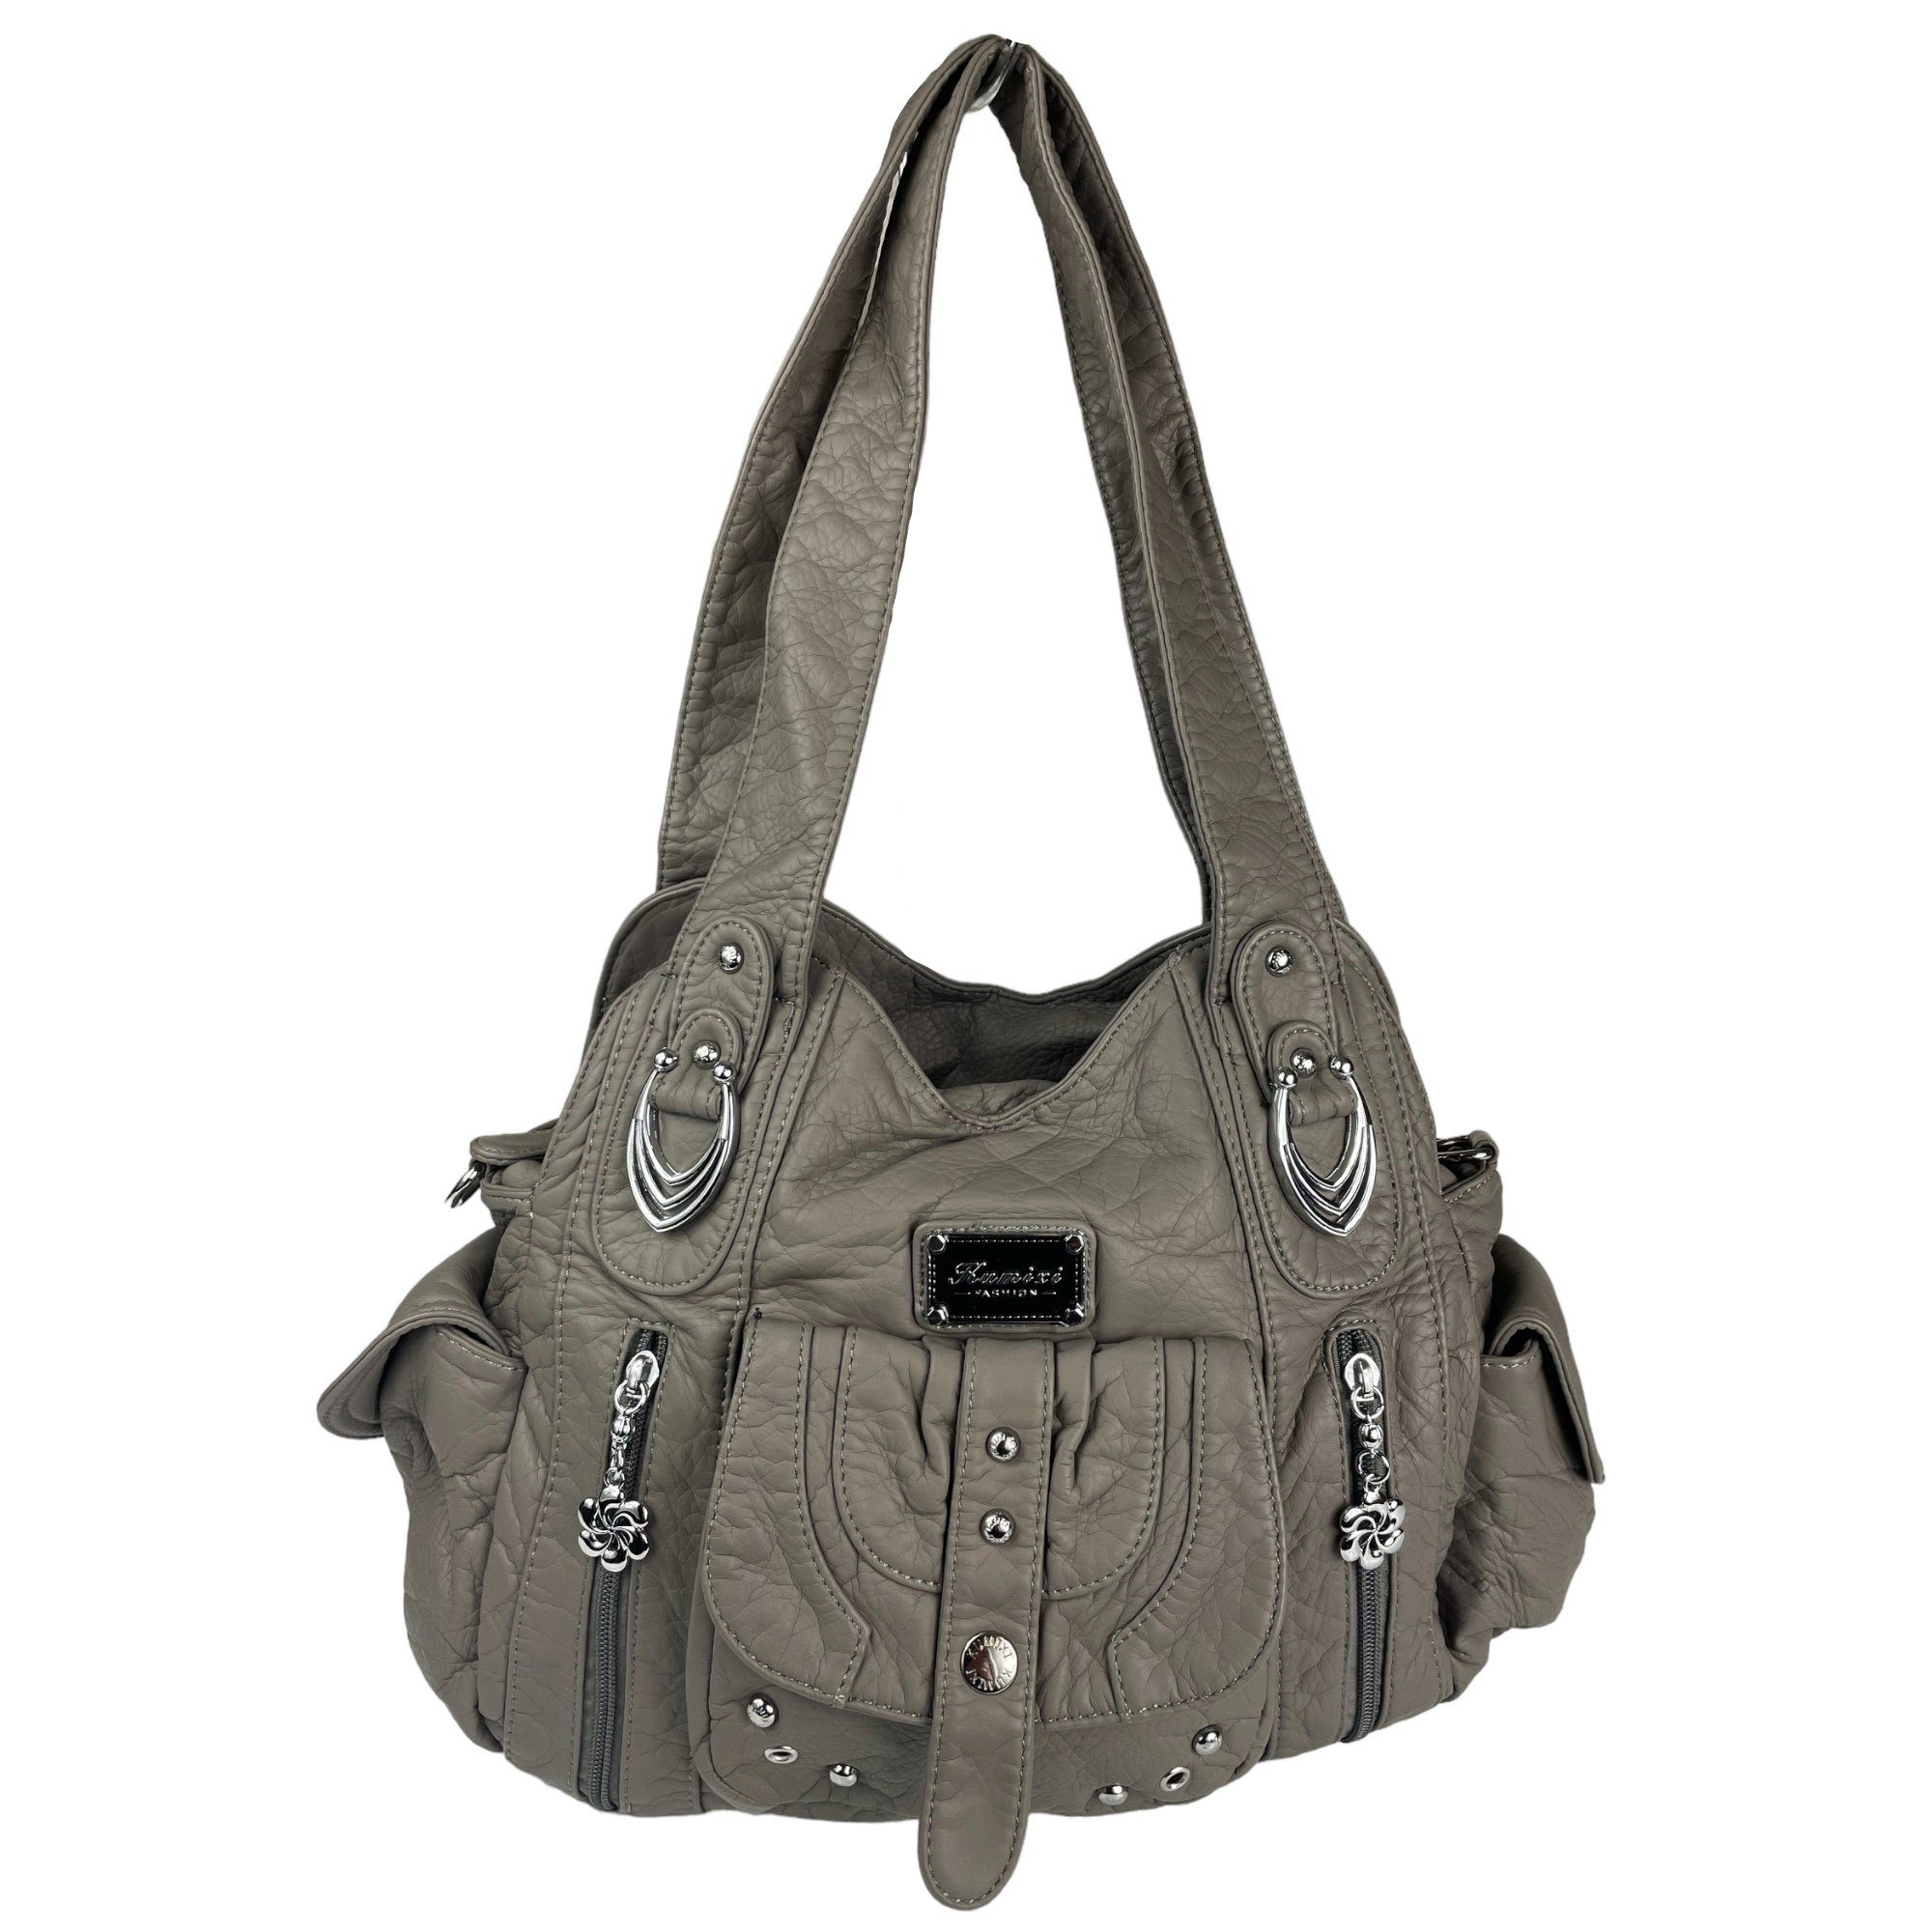 Taschen4life Schultertasche Damen Handtasche AKW22026, lange Tragegriffe & abnehmbarer Schulterriemen, Schultertasche grau